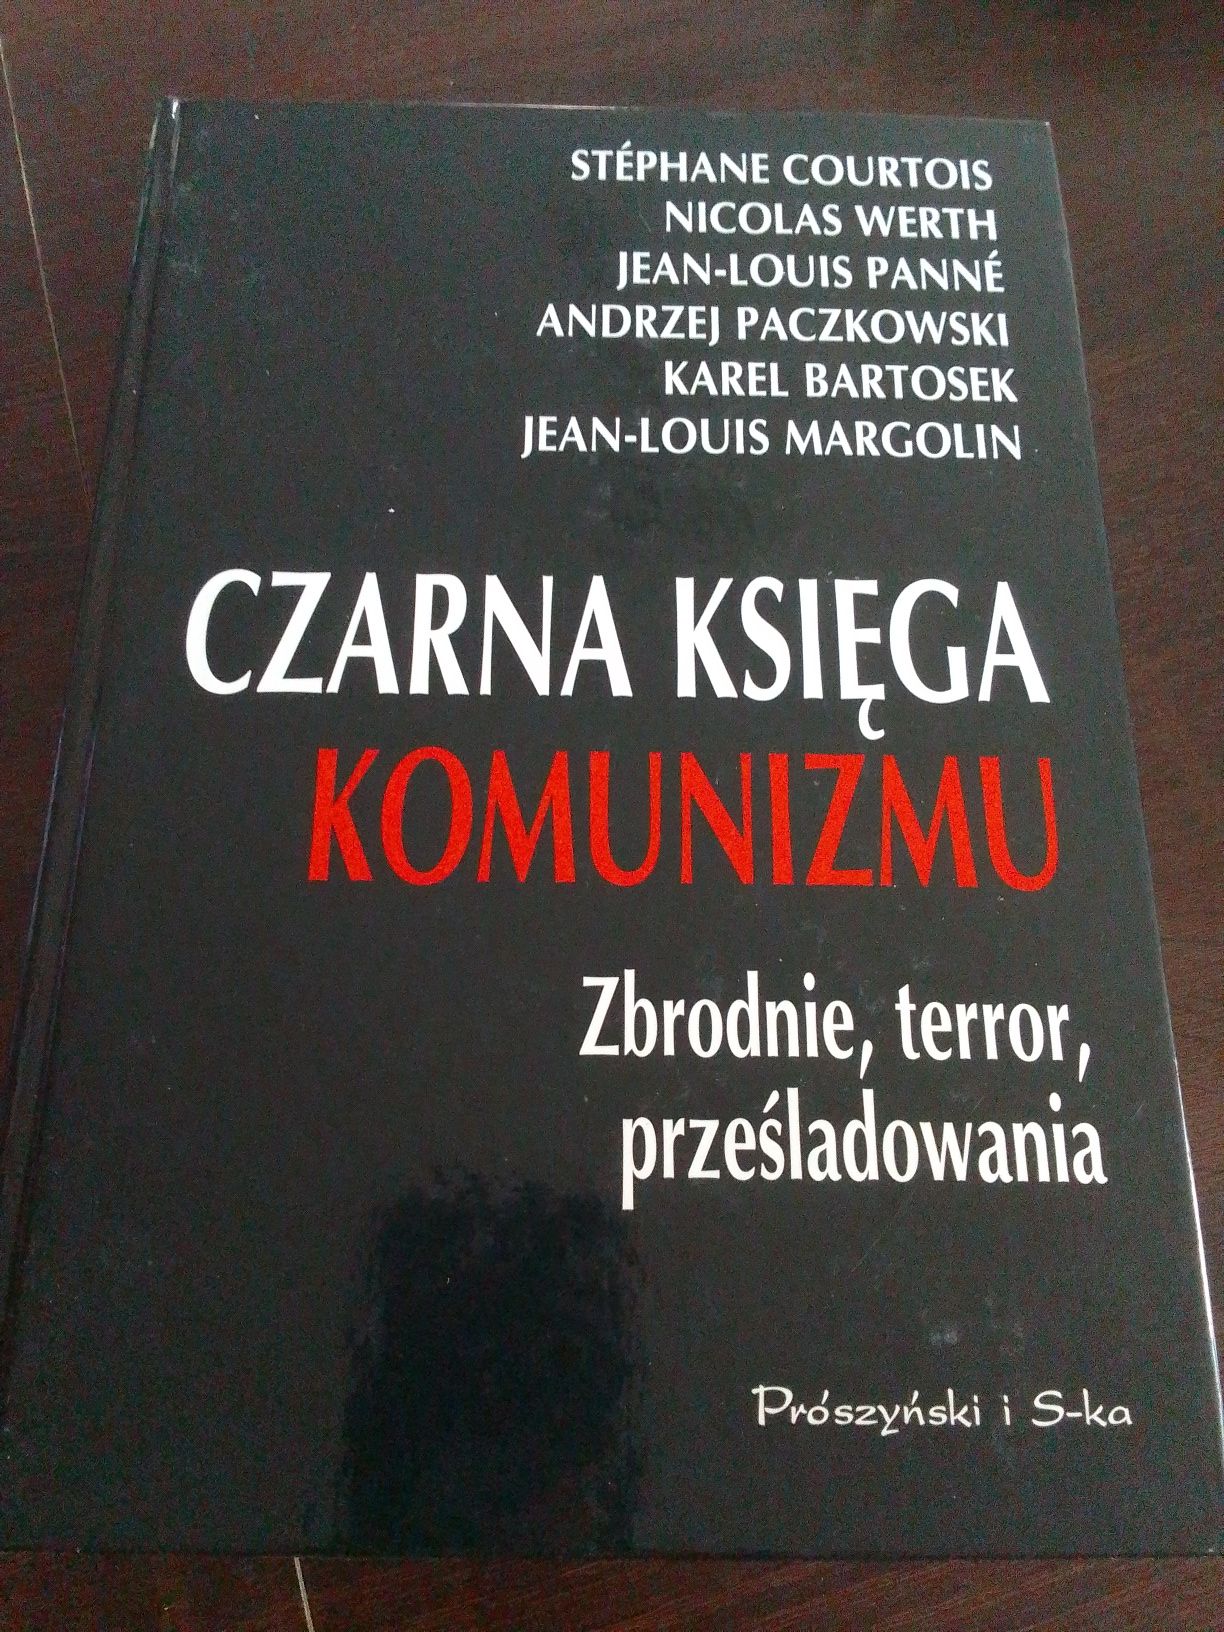 Książka pt." Czarna księga komunizmu" W-wa 1999